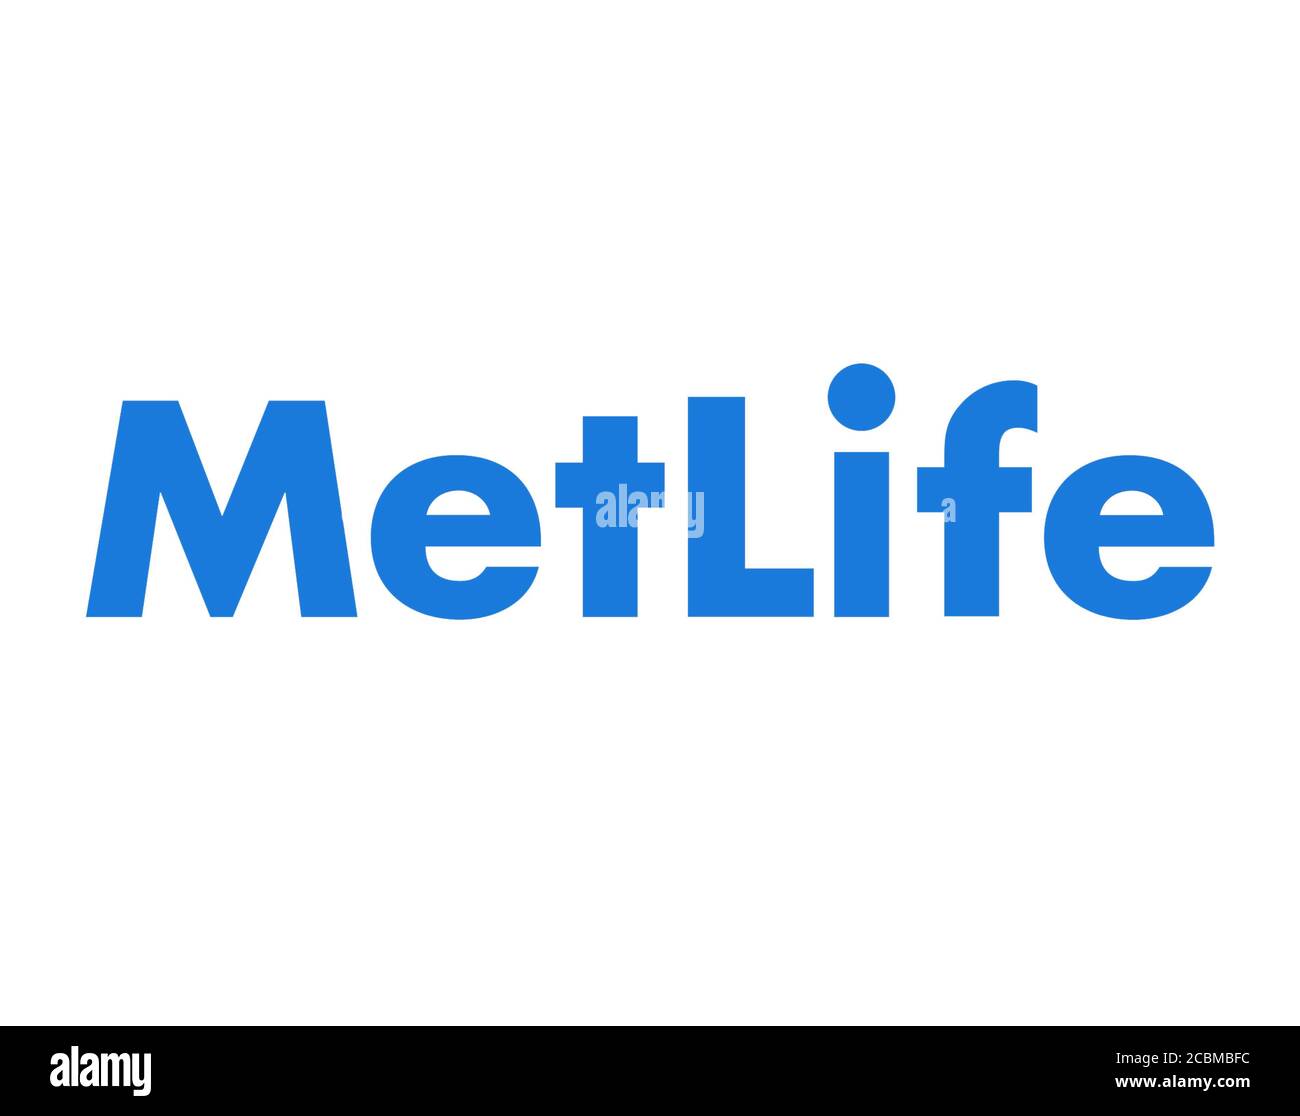 Metlife Stock Photo